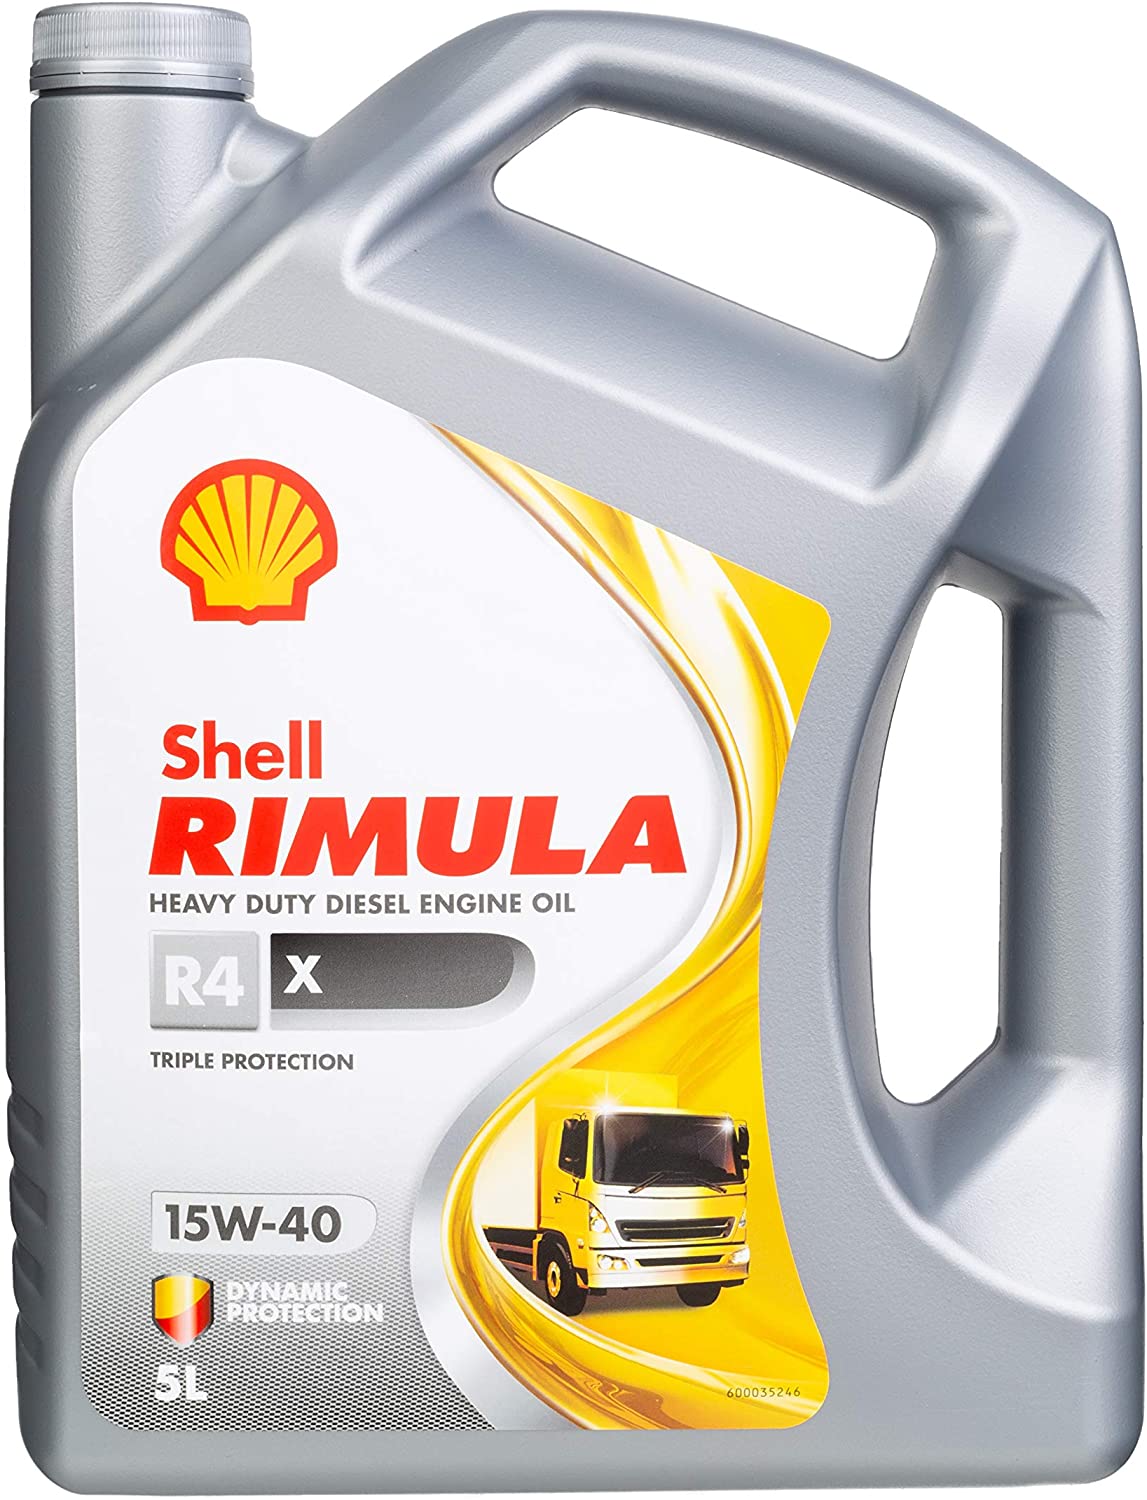 Shell Rimula R4 15w40 Diesel Engine Oil 5l